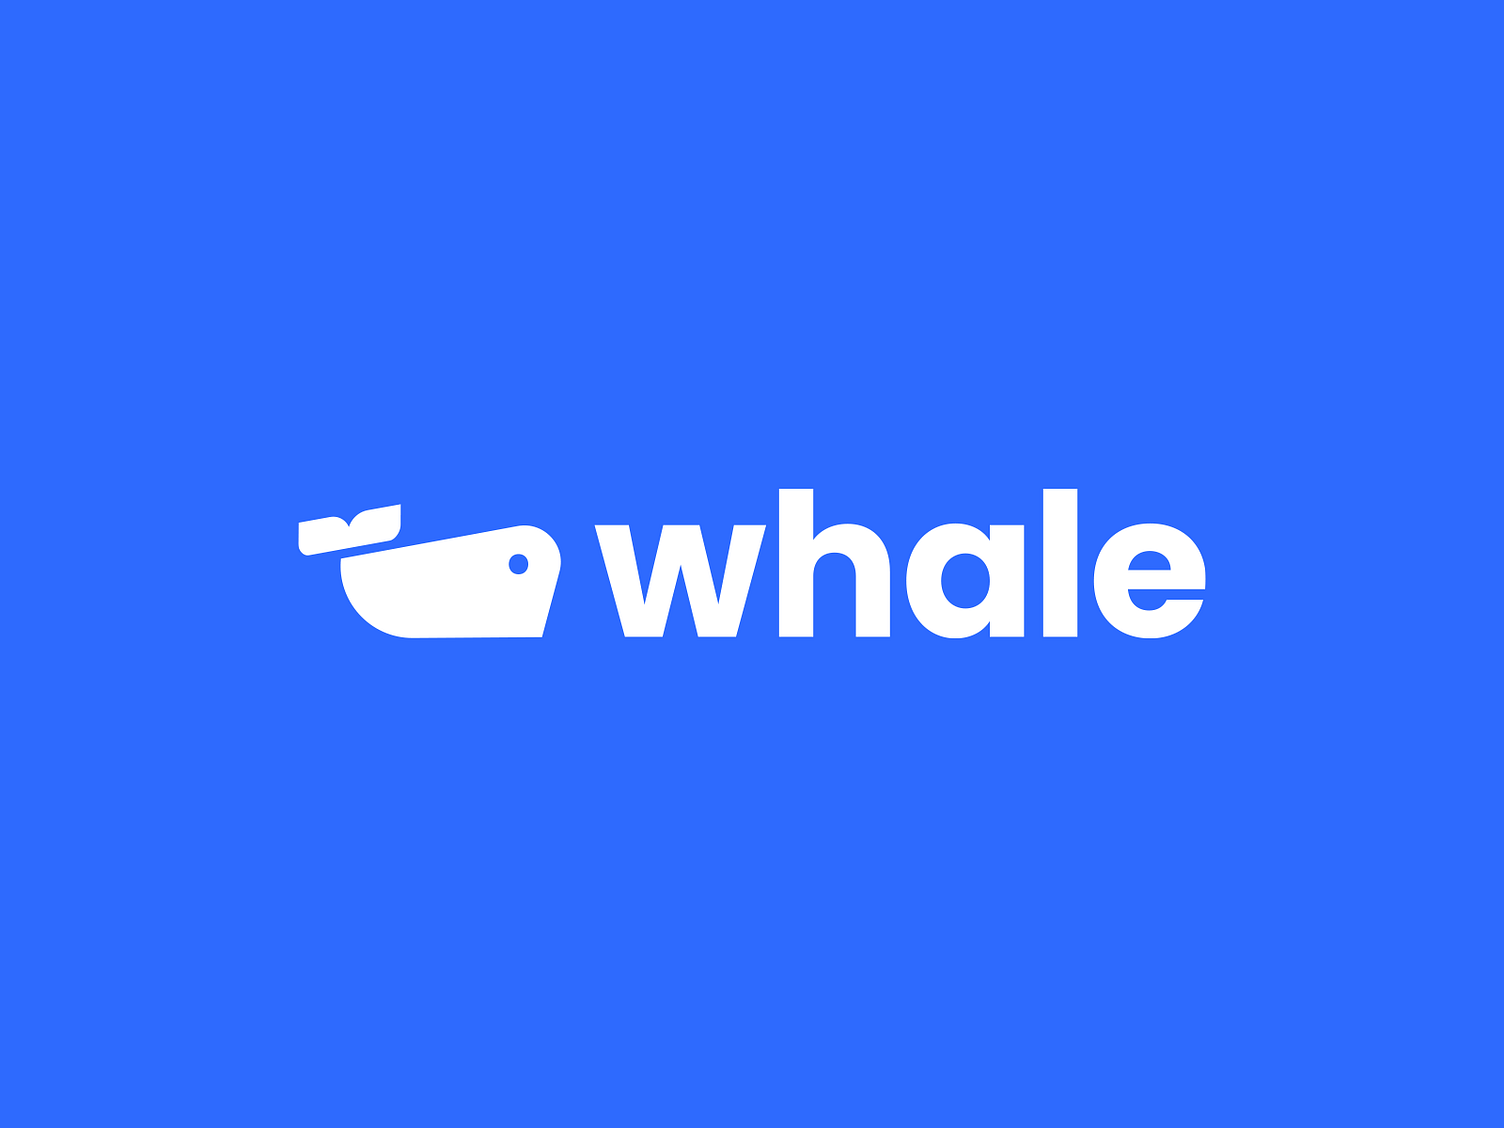 Whale - logo design, unused concept by Aditya Chhatrala on Dribbble